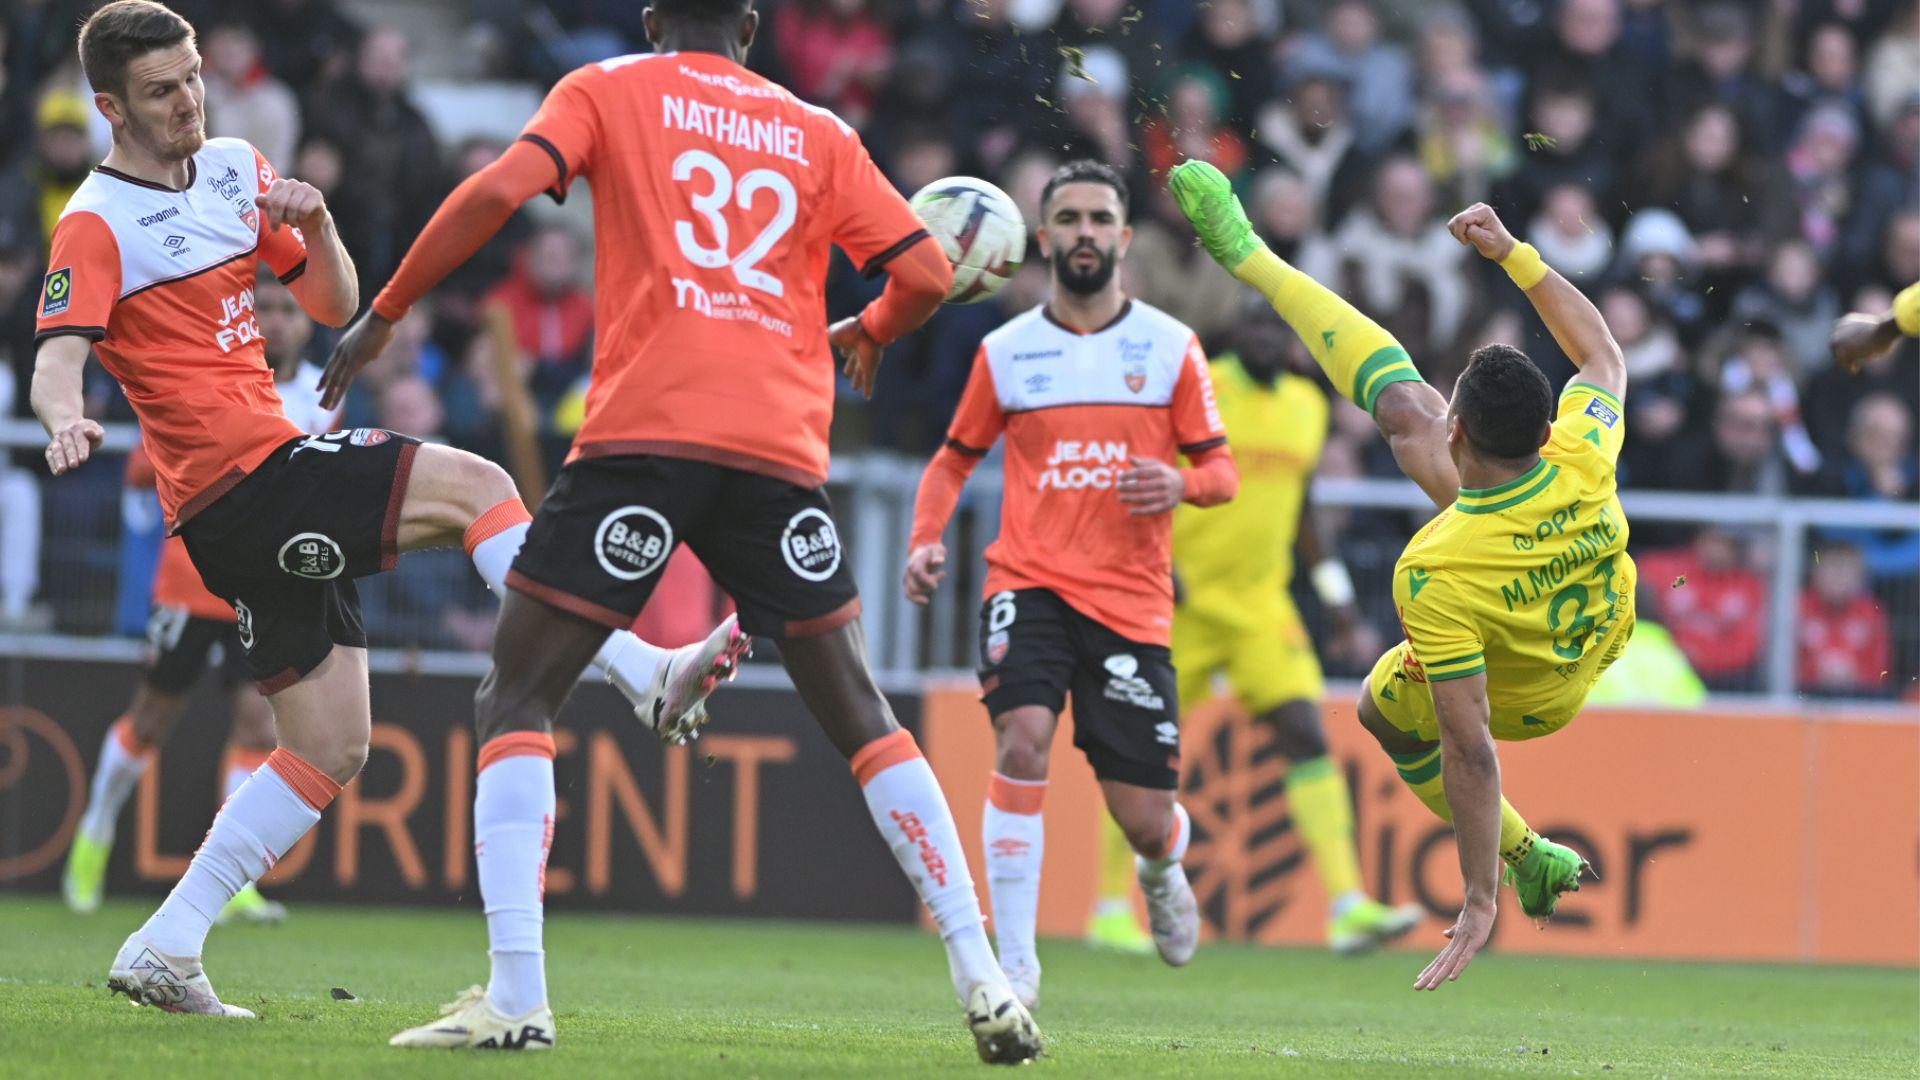 VIDEO | Ligue 1 Highlights: Lorient vs Nantes